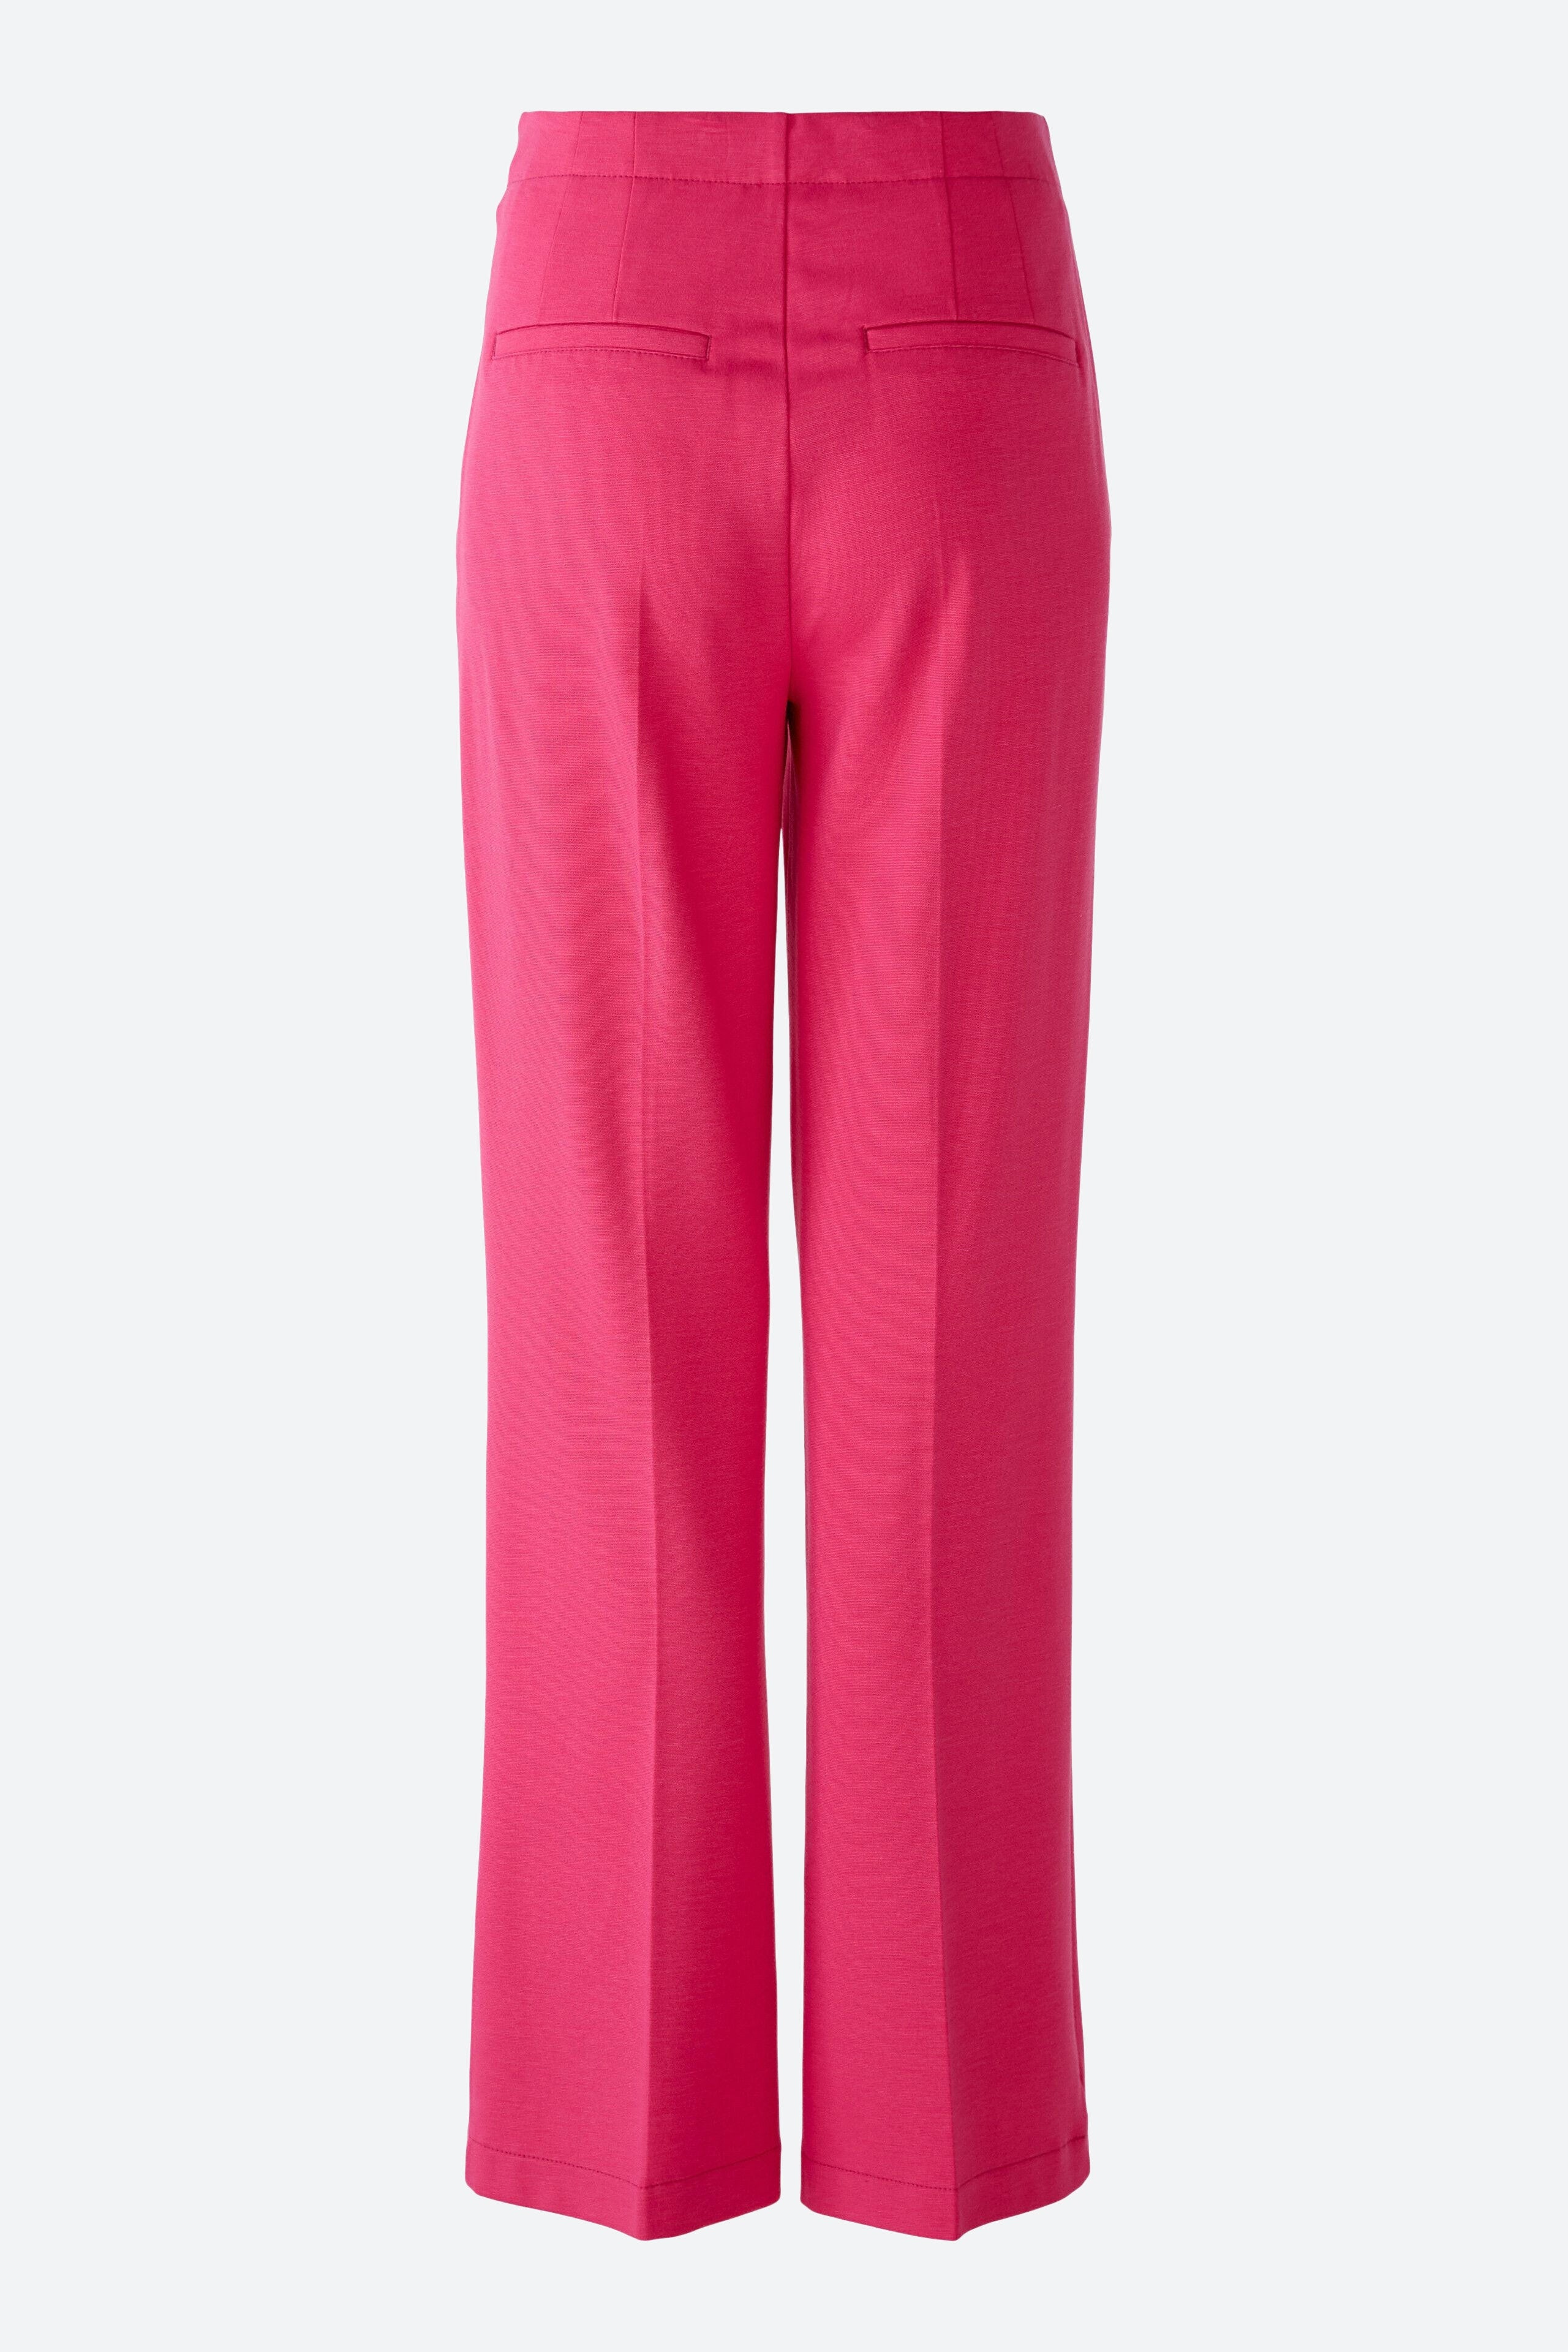 Pink Slip On Trousers In Heavy Jersey_07